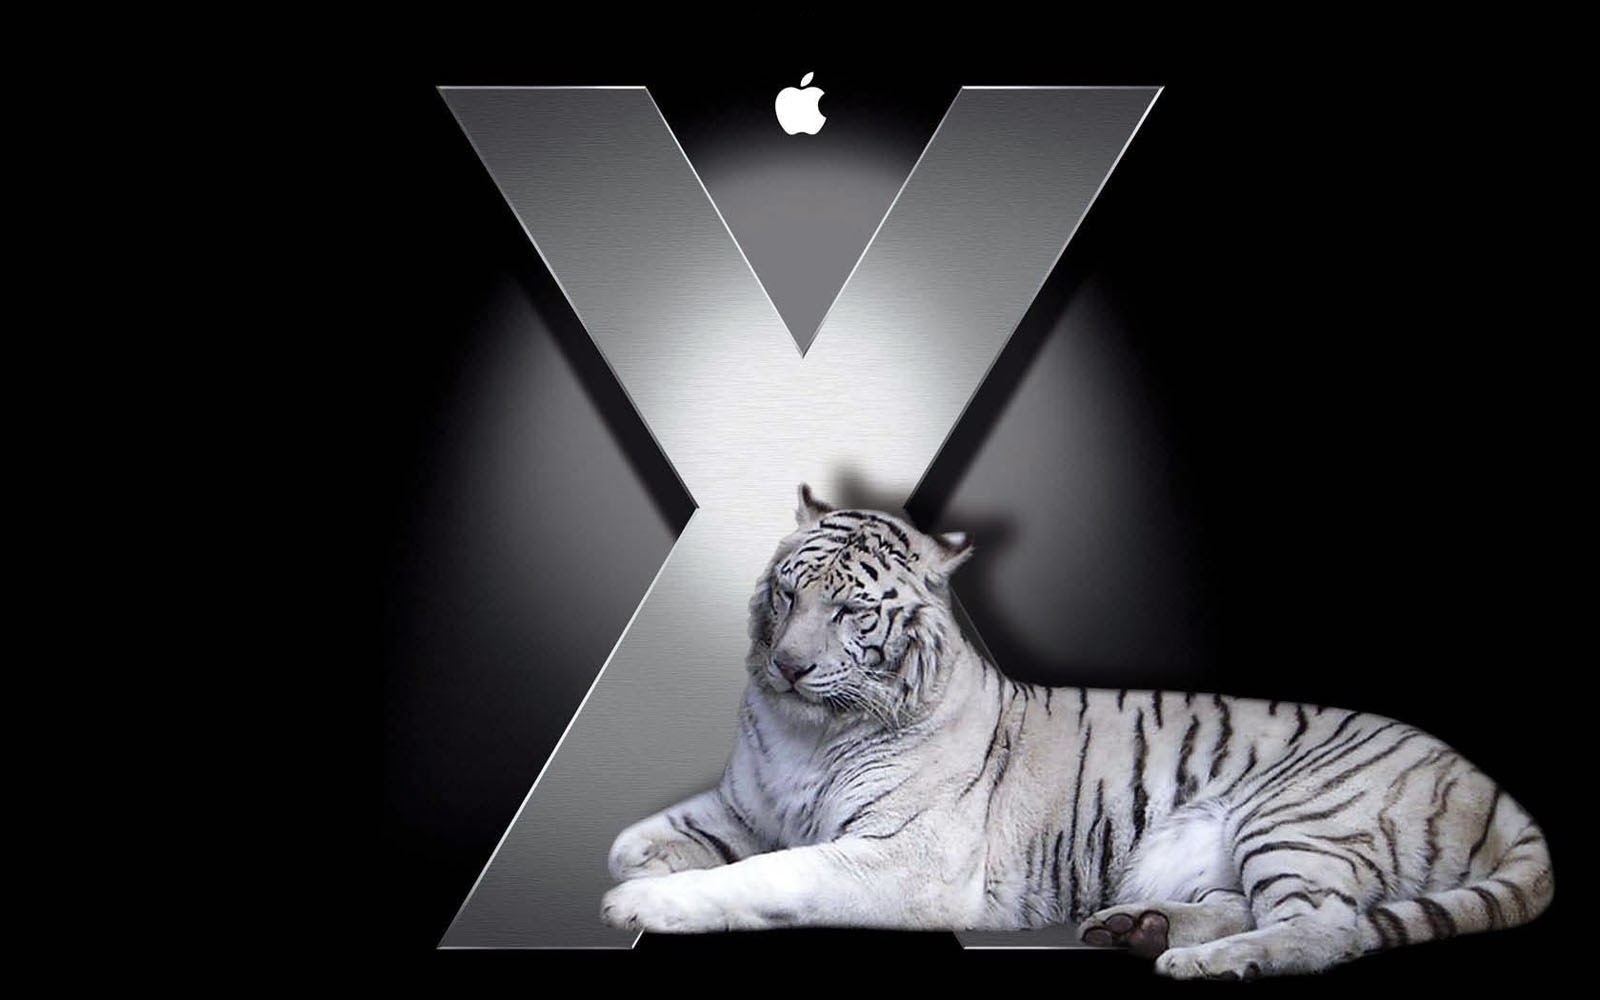  Mac OS X Tiger Wallpapers Mac OS X Tiger DesktopWallpapers Mac 1600x1000